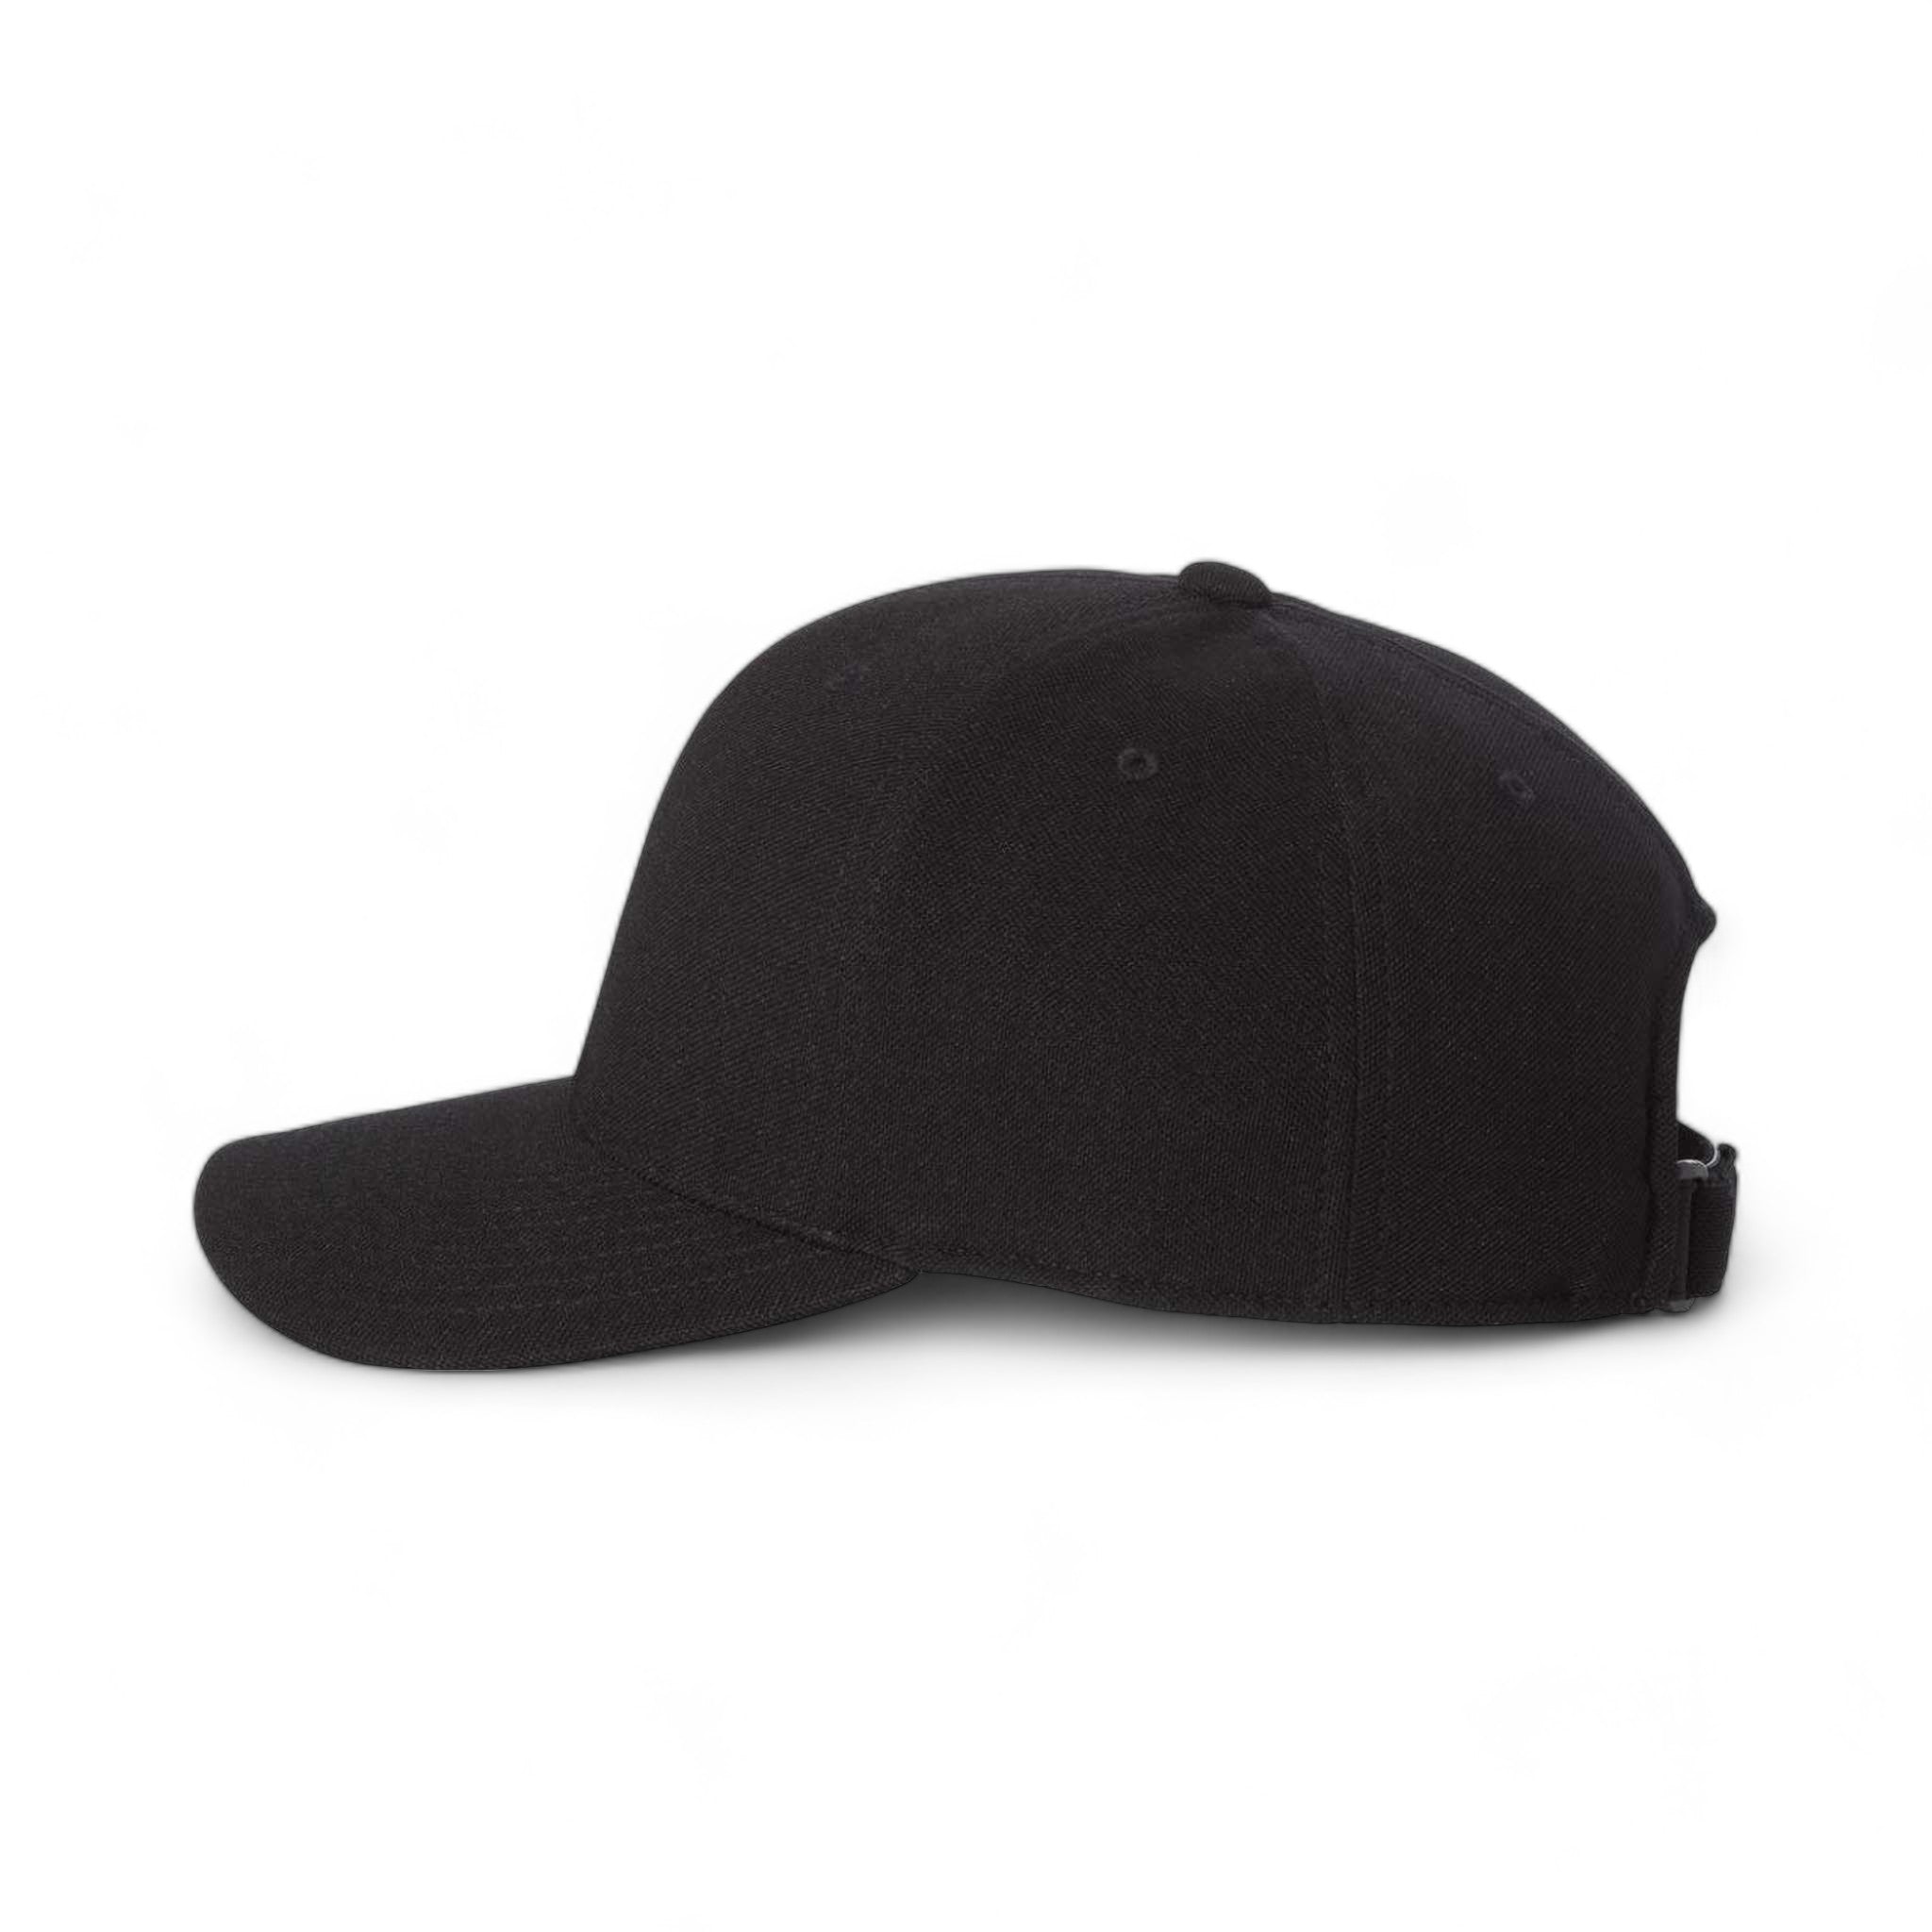 Side view of Flexfit 110P custom hat in black